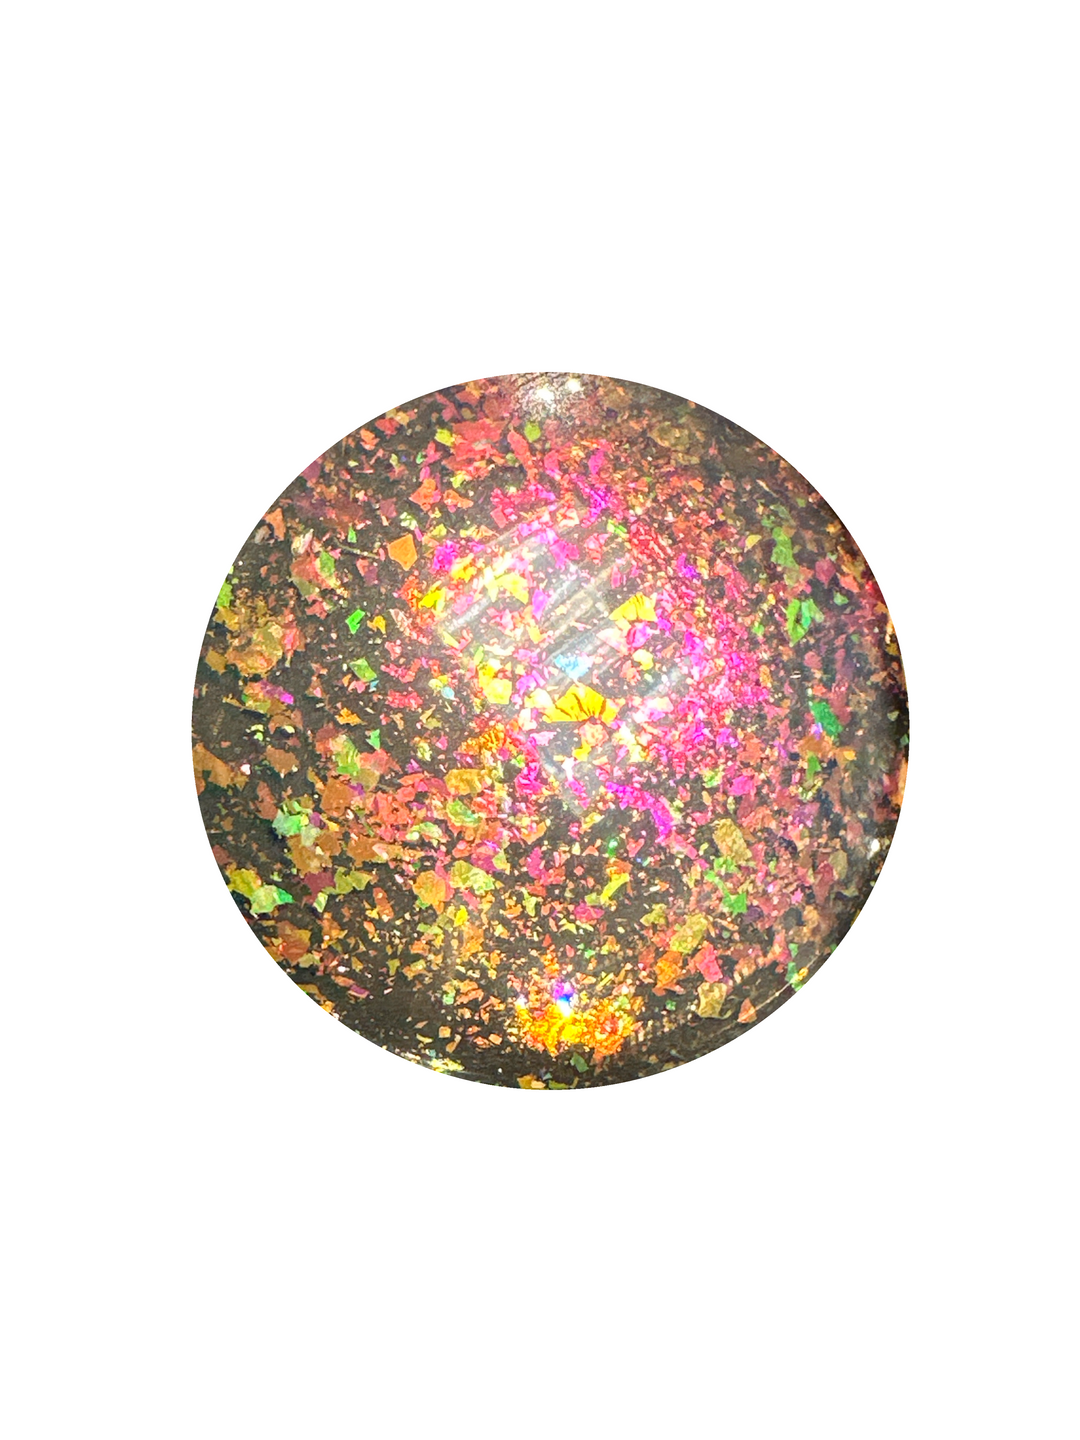 MM - Brazilian Opal Candy Chrome